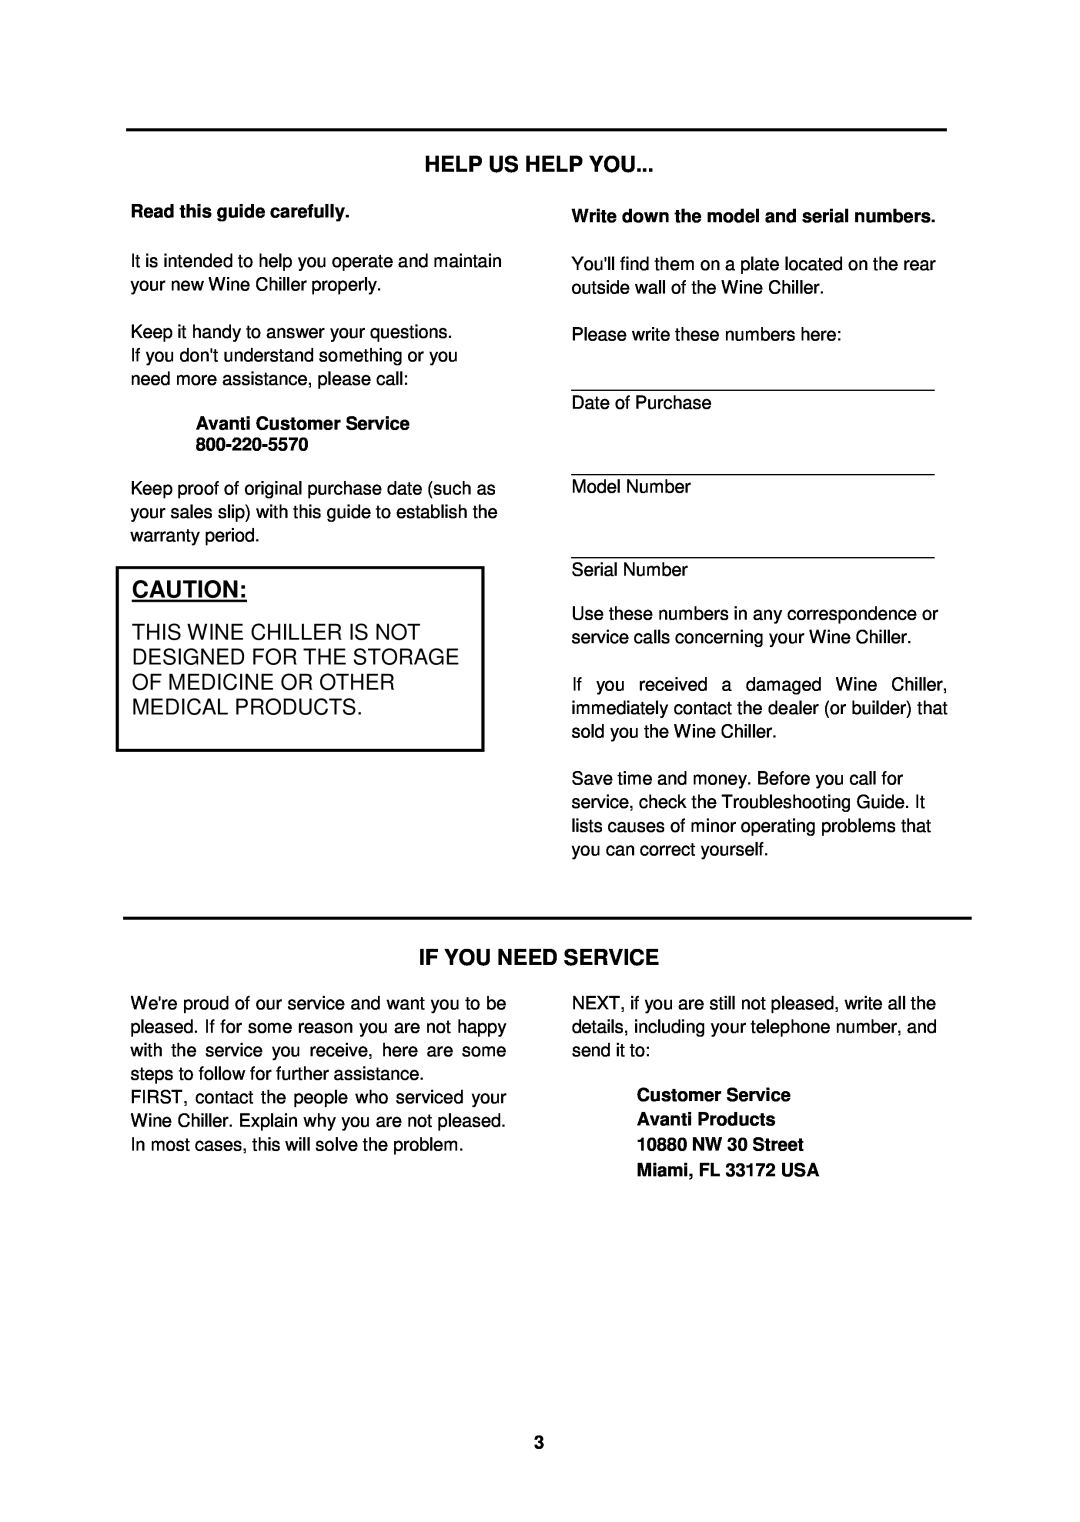 Avanti EWC1802DZ manual Help Us Help You, If You Need Service, Read this guide carefully, Avanti Customer Service 